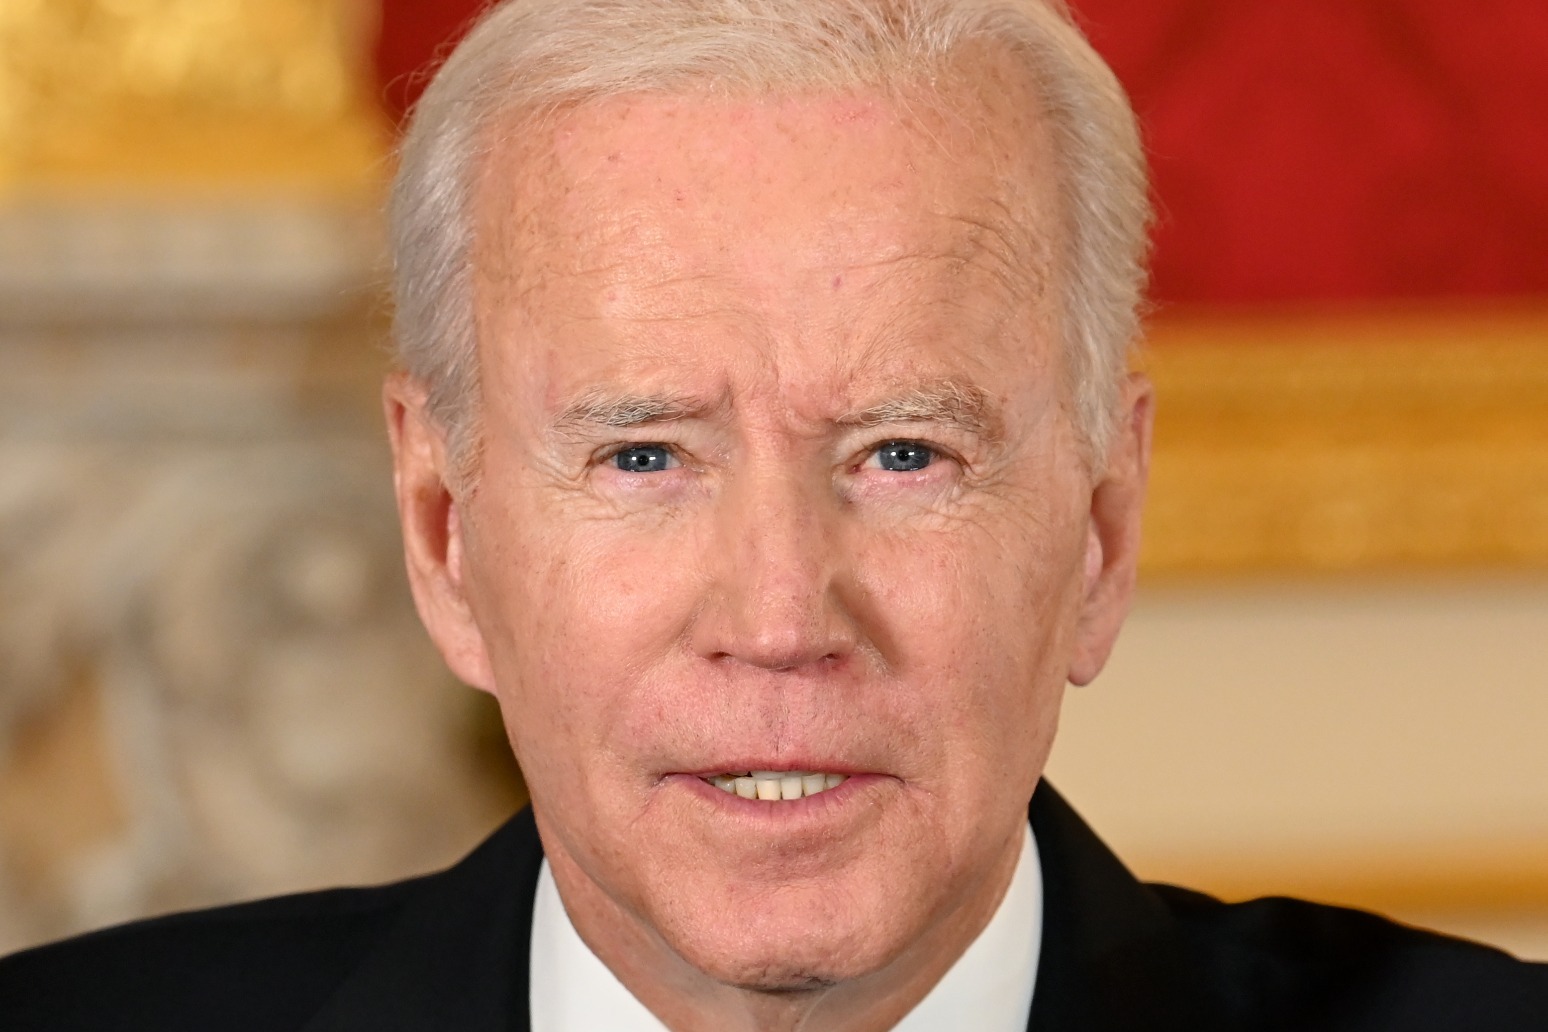 President Biden says nuclear ‘Armageddon’ risk highest since Cuban Missile Crisis 